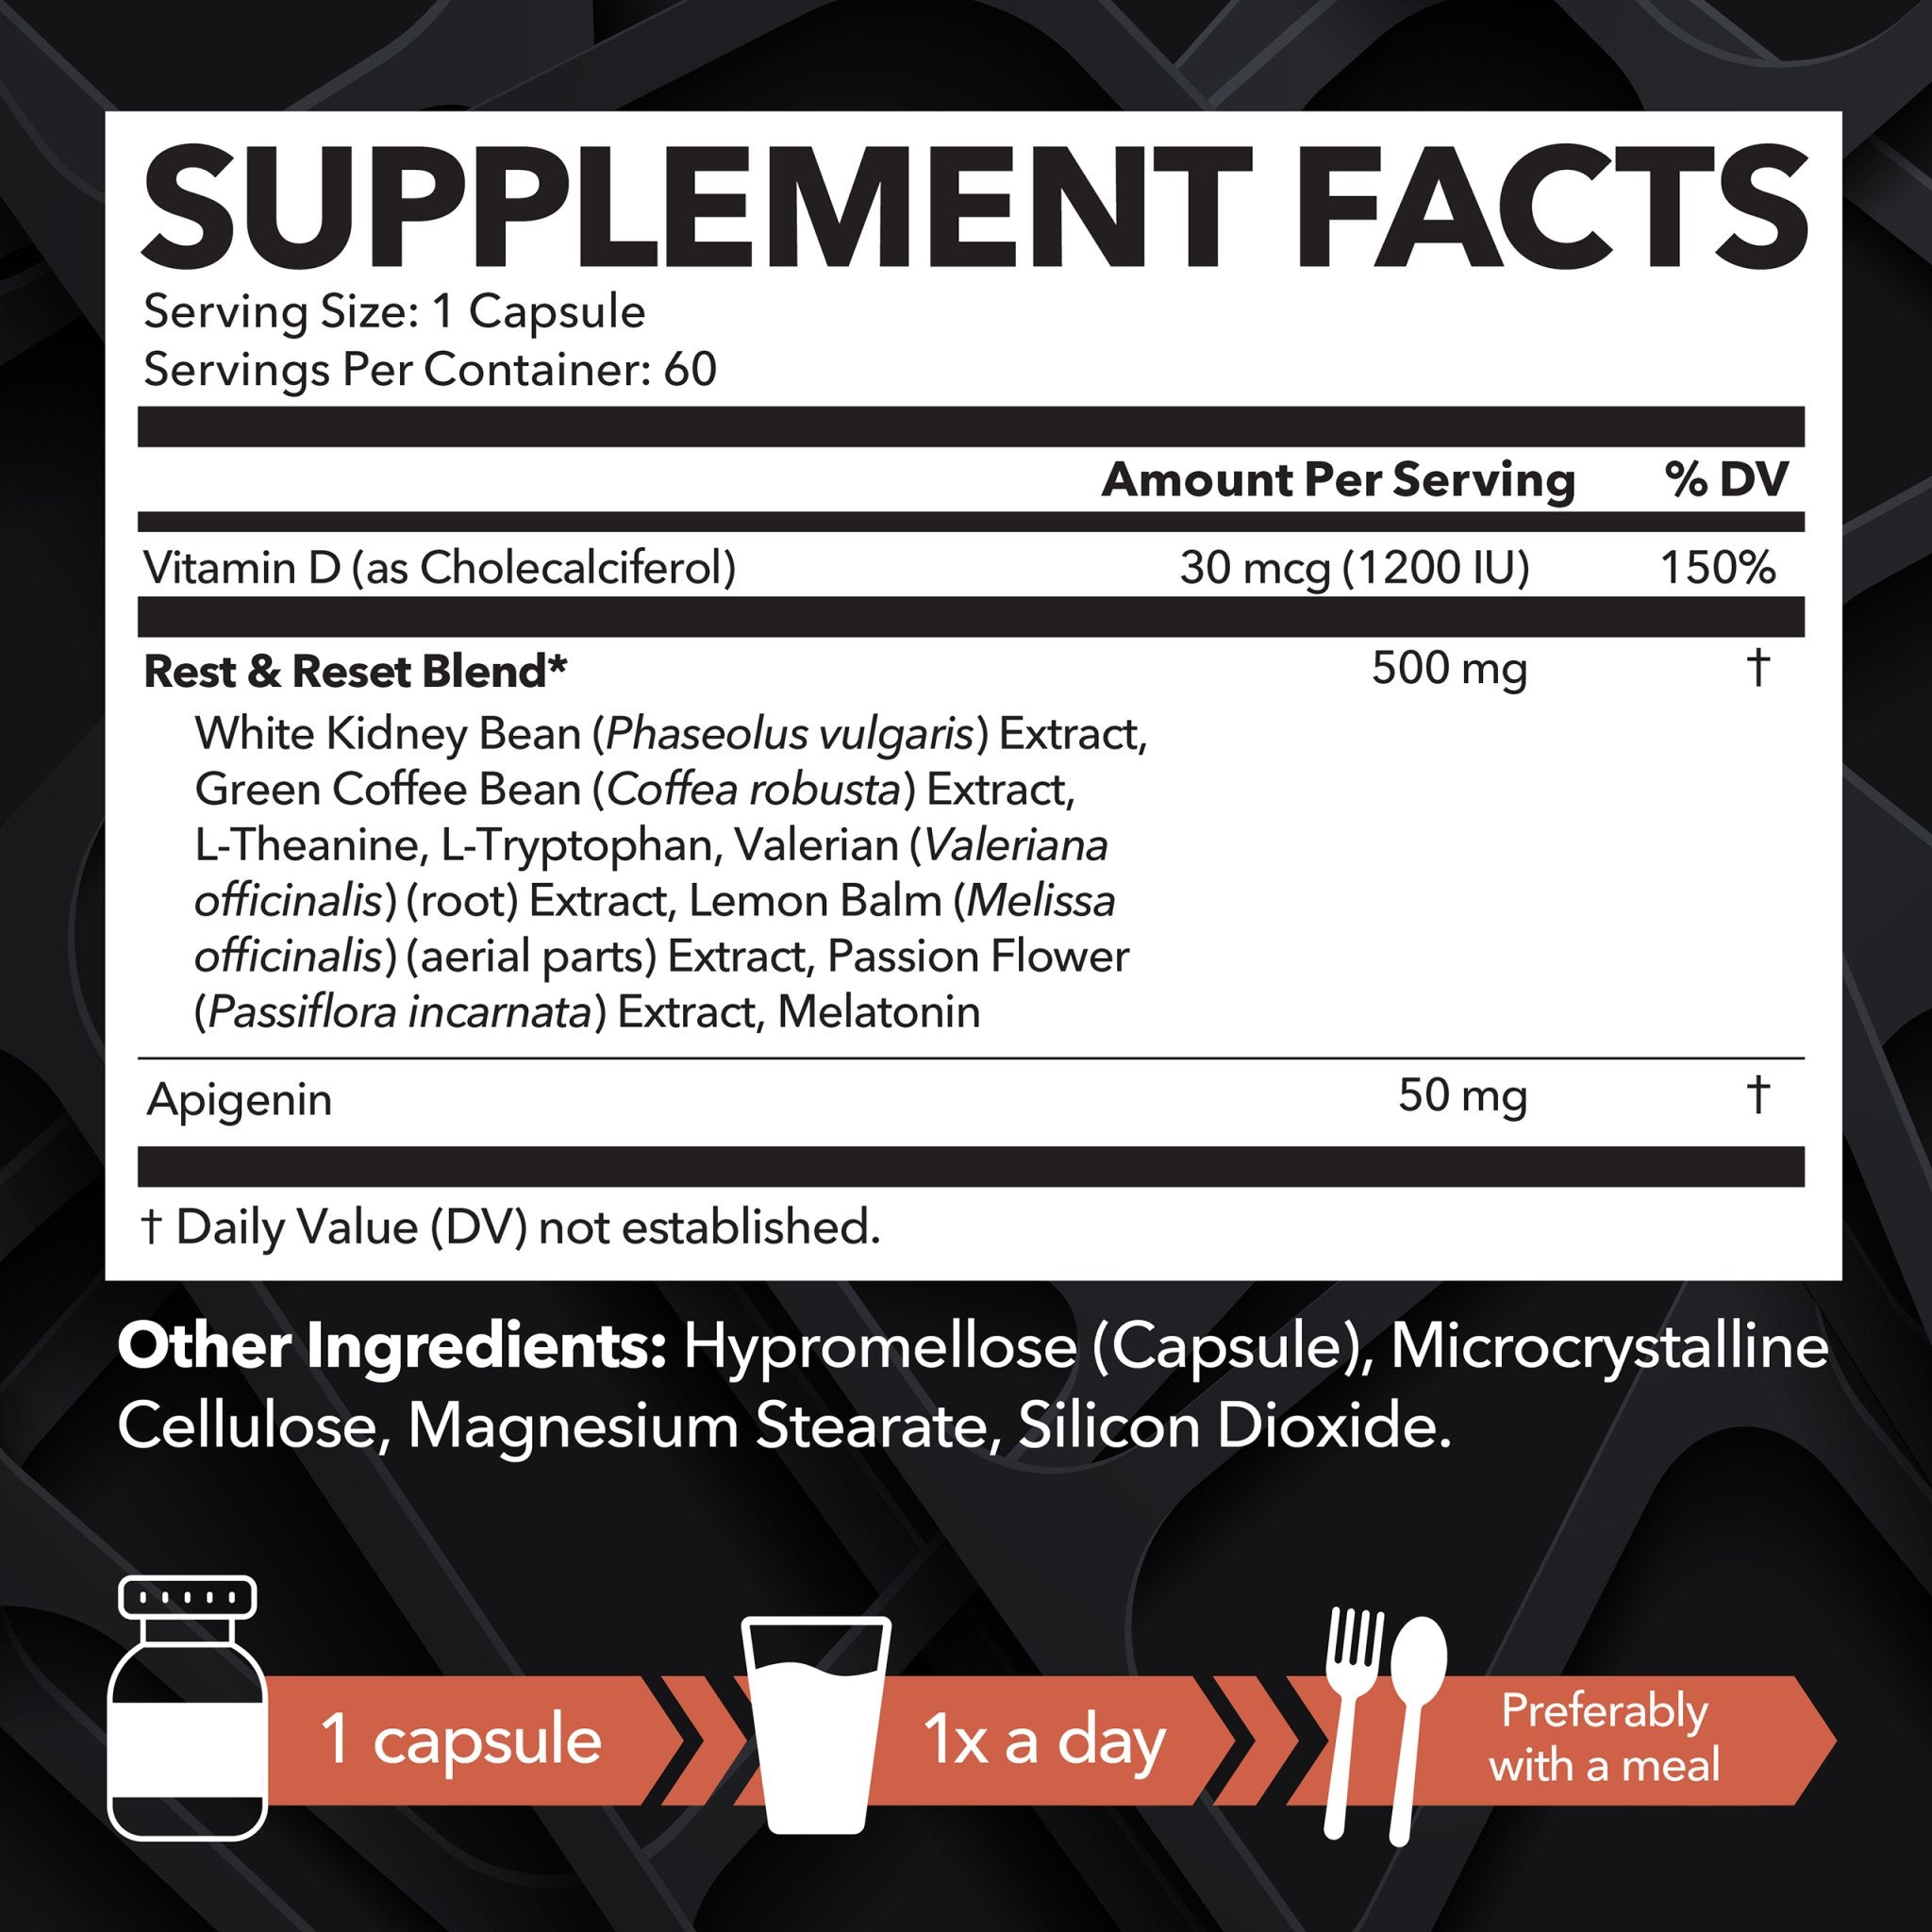 Night Time Fat Burner + Apigenin Capsules - Havasu Nutrition